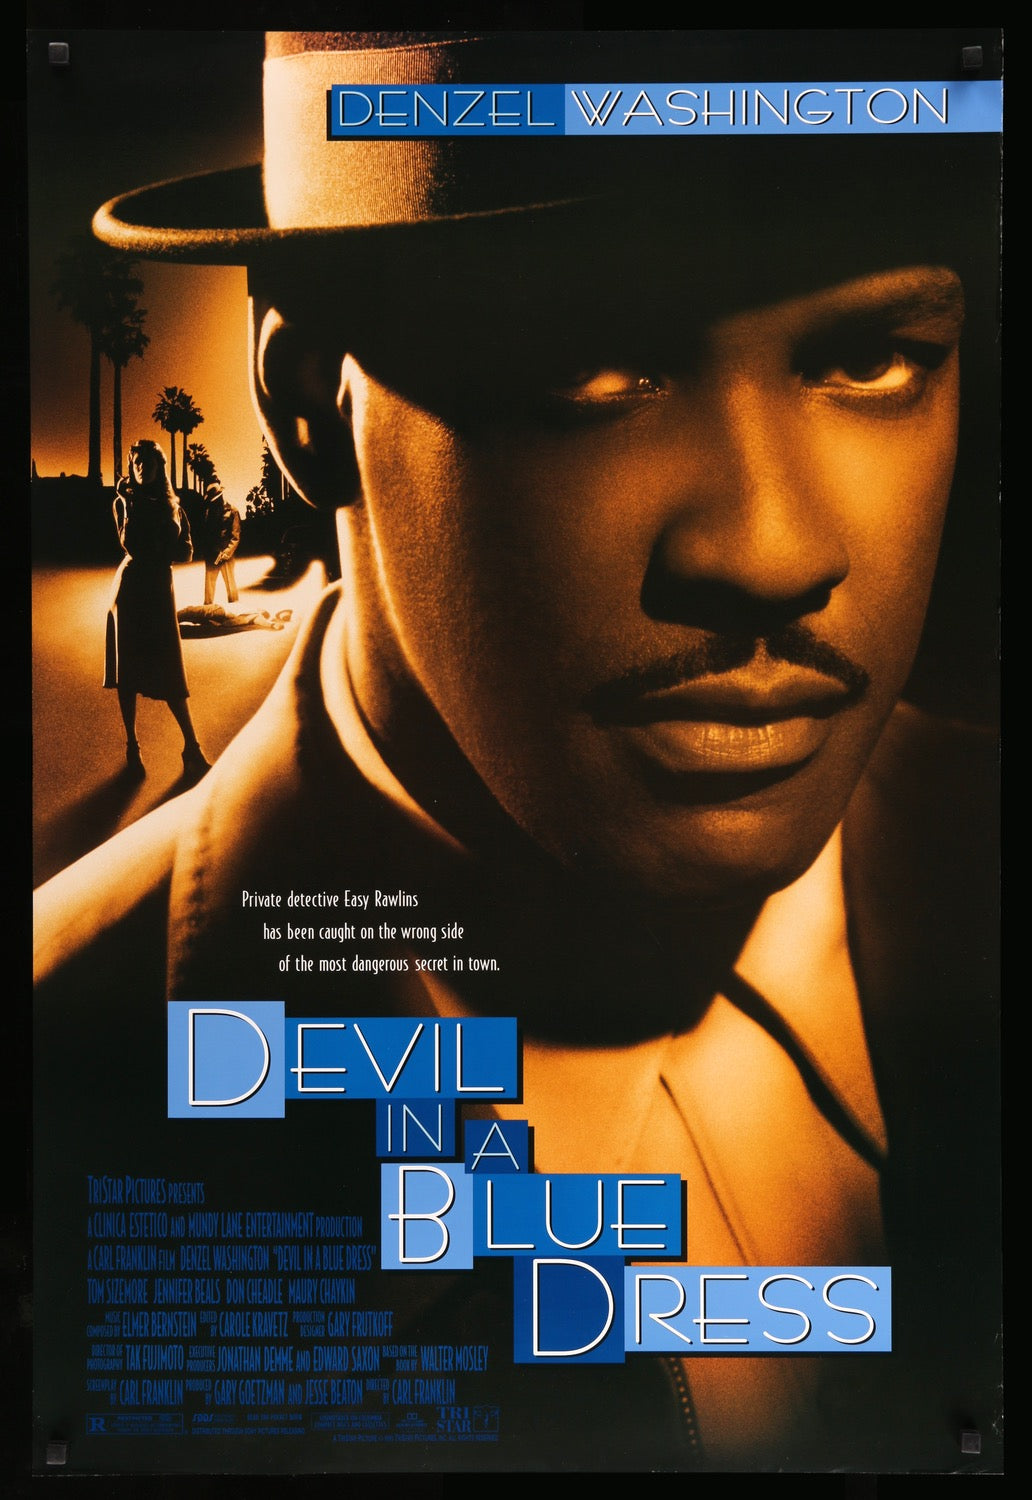 Devil in a Blue Dress (1995) original movie poster for sale at Original Film Art